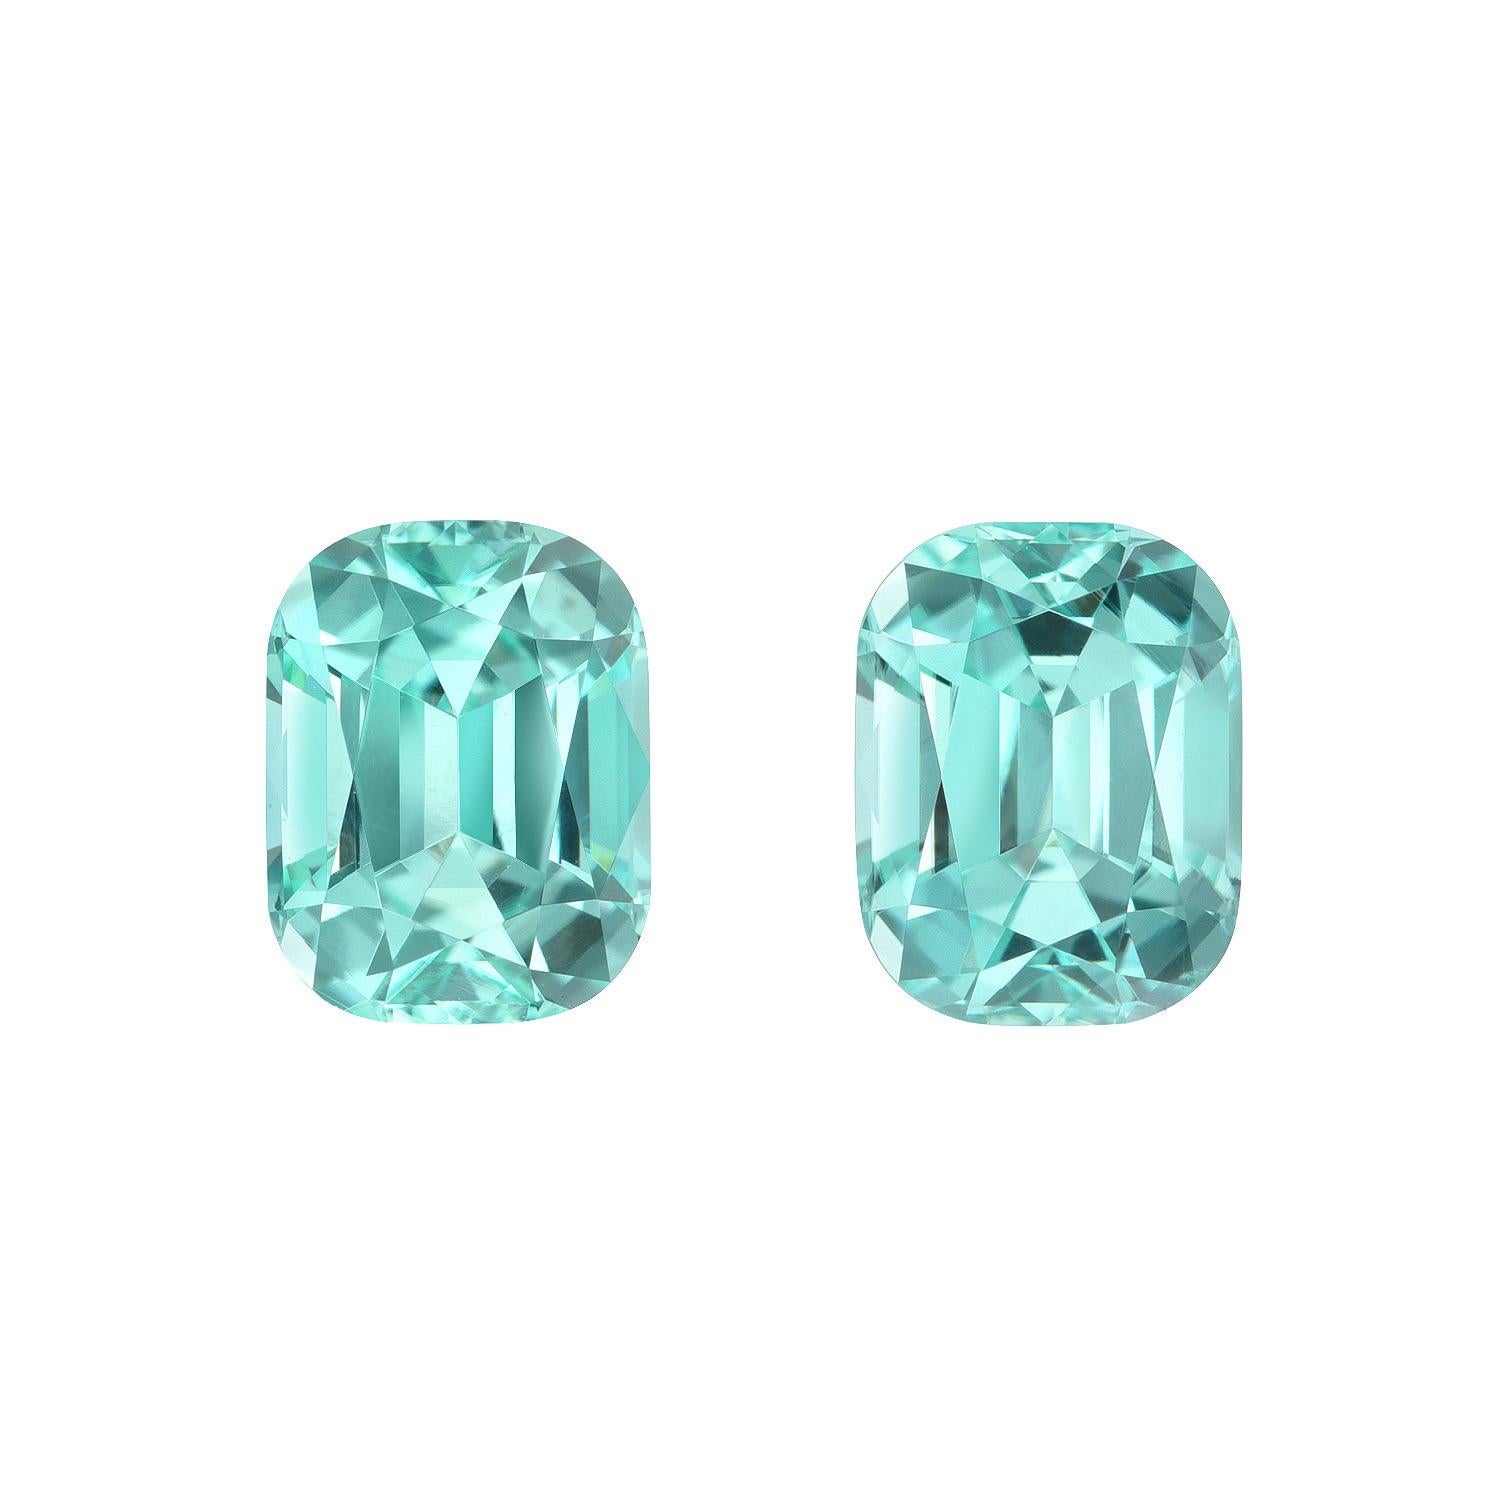 Cushion Cut Blue Green Tourmaline Earring Gem Set 9.17 Carat Cushion Loose Gemstones